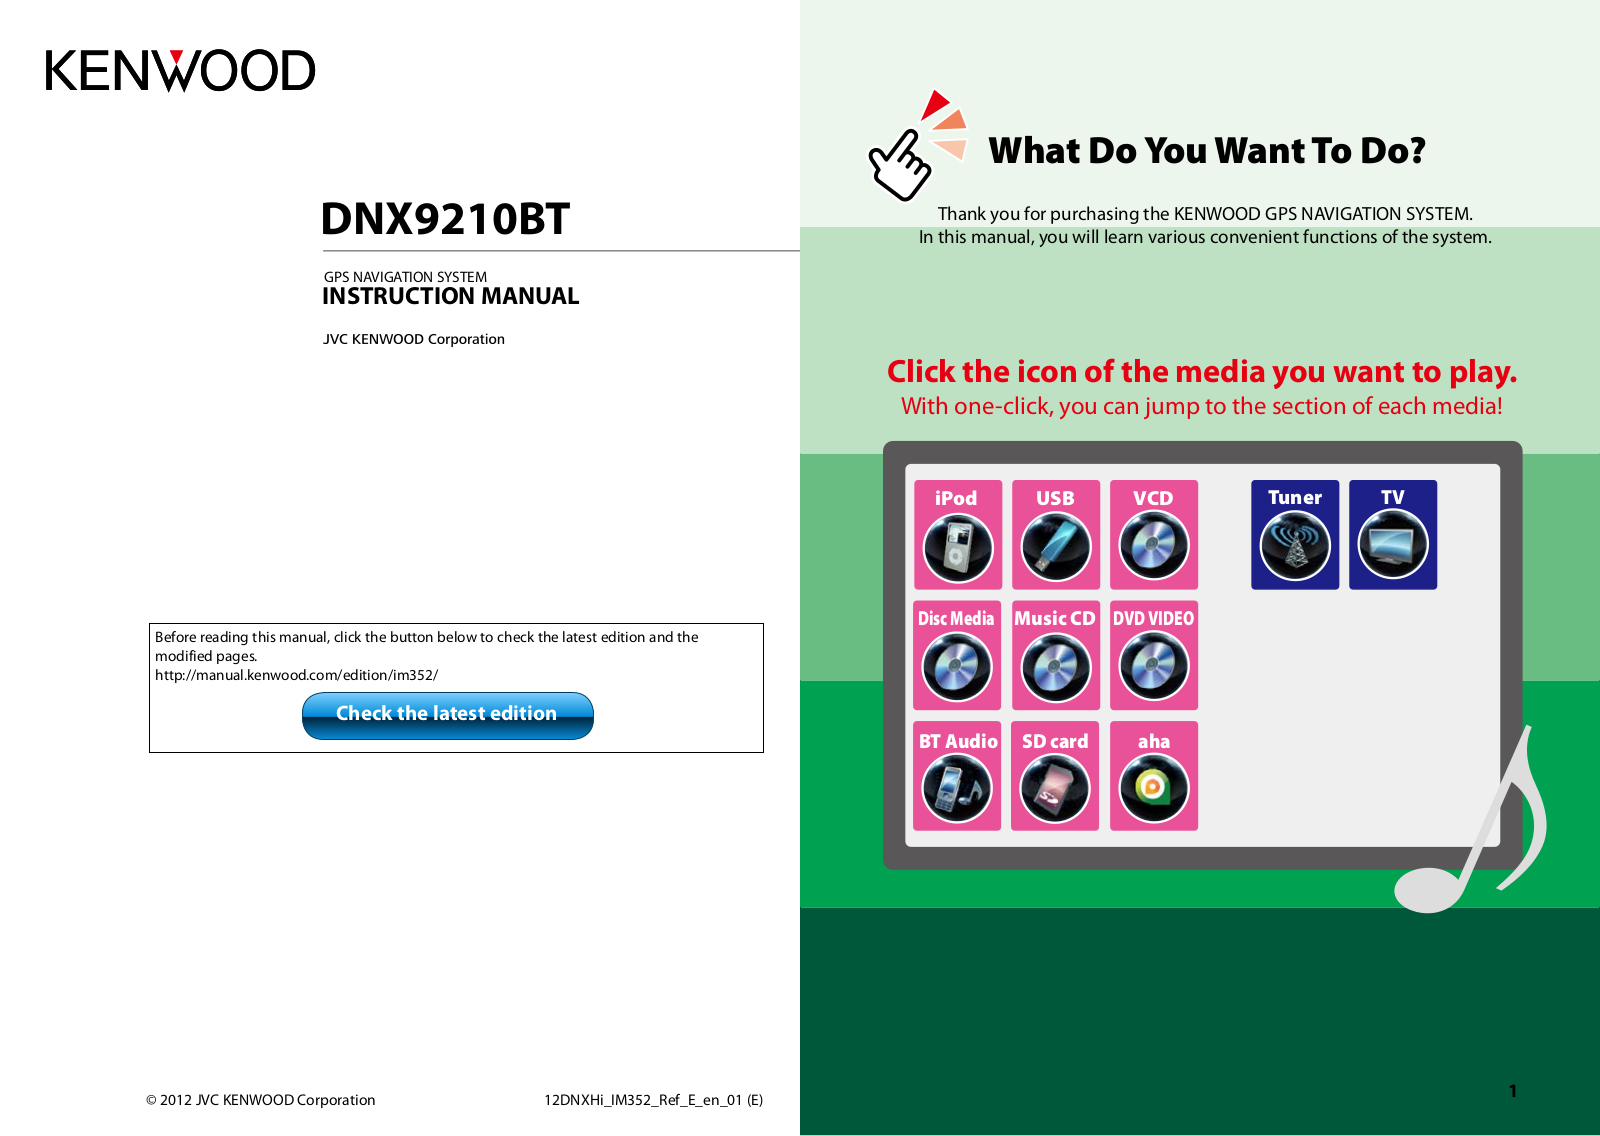 Kenwood DNX9210BT User Manual